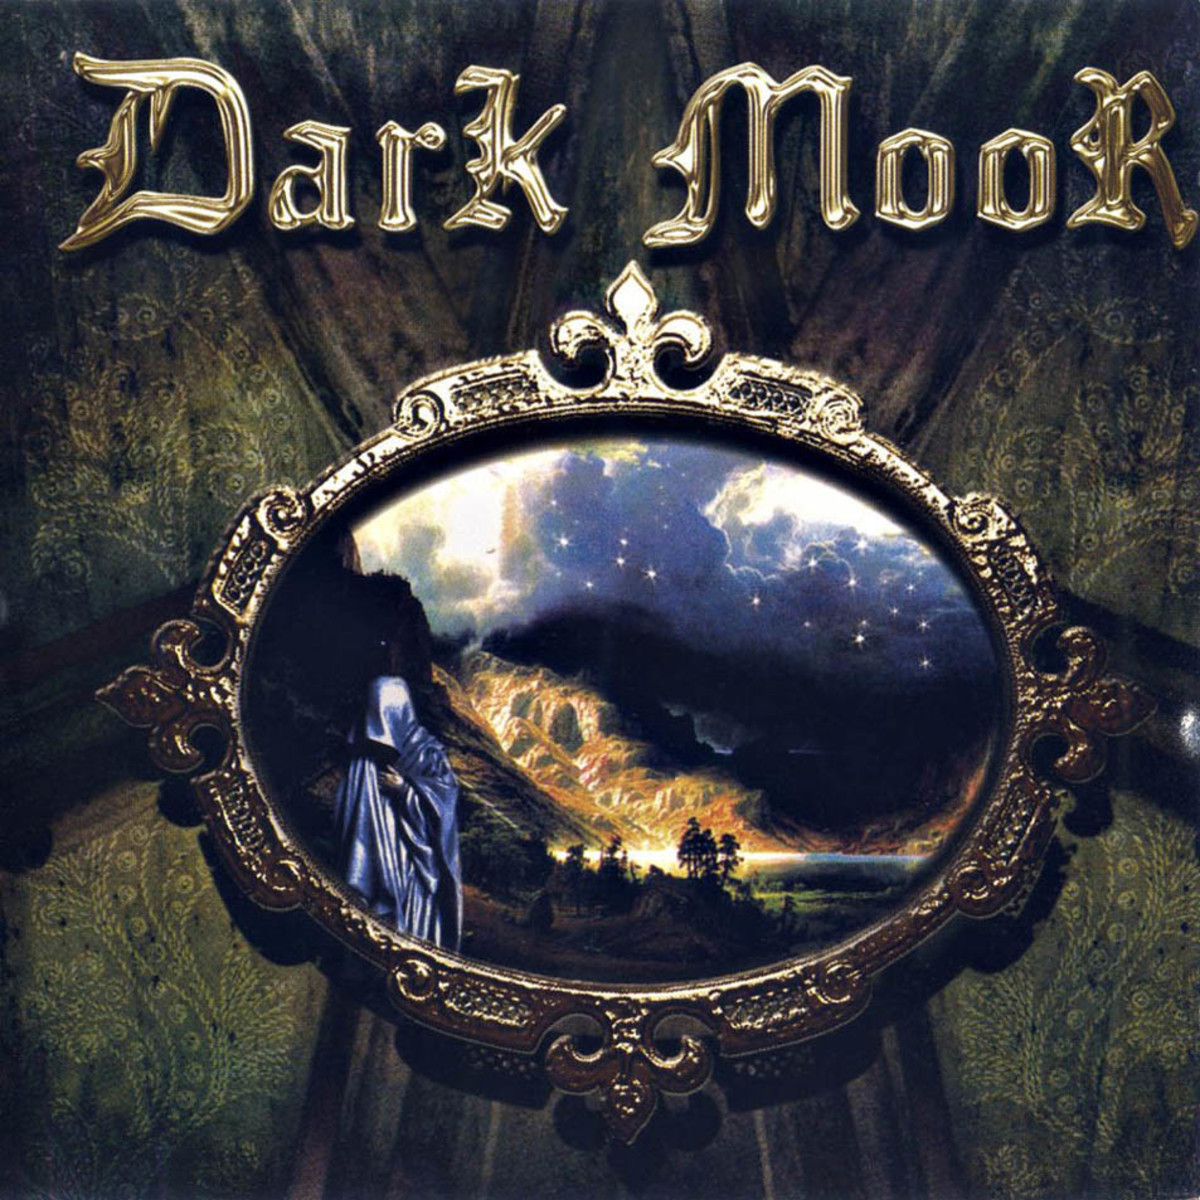 review-of-the-album-dark-moor-2003-by-spanish-power-metal-band-dark-moor